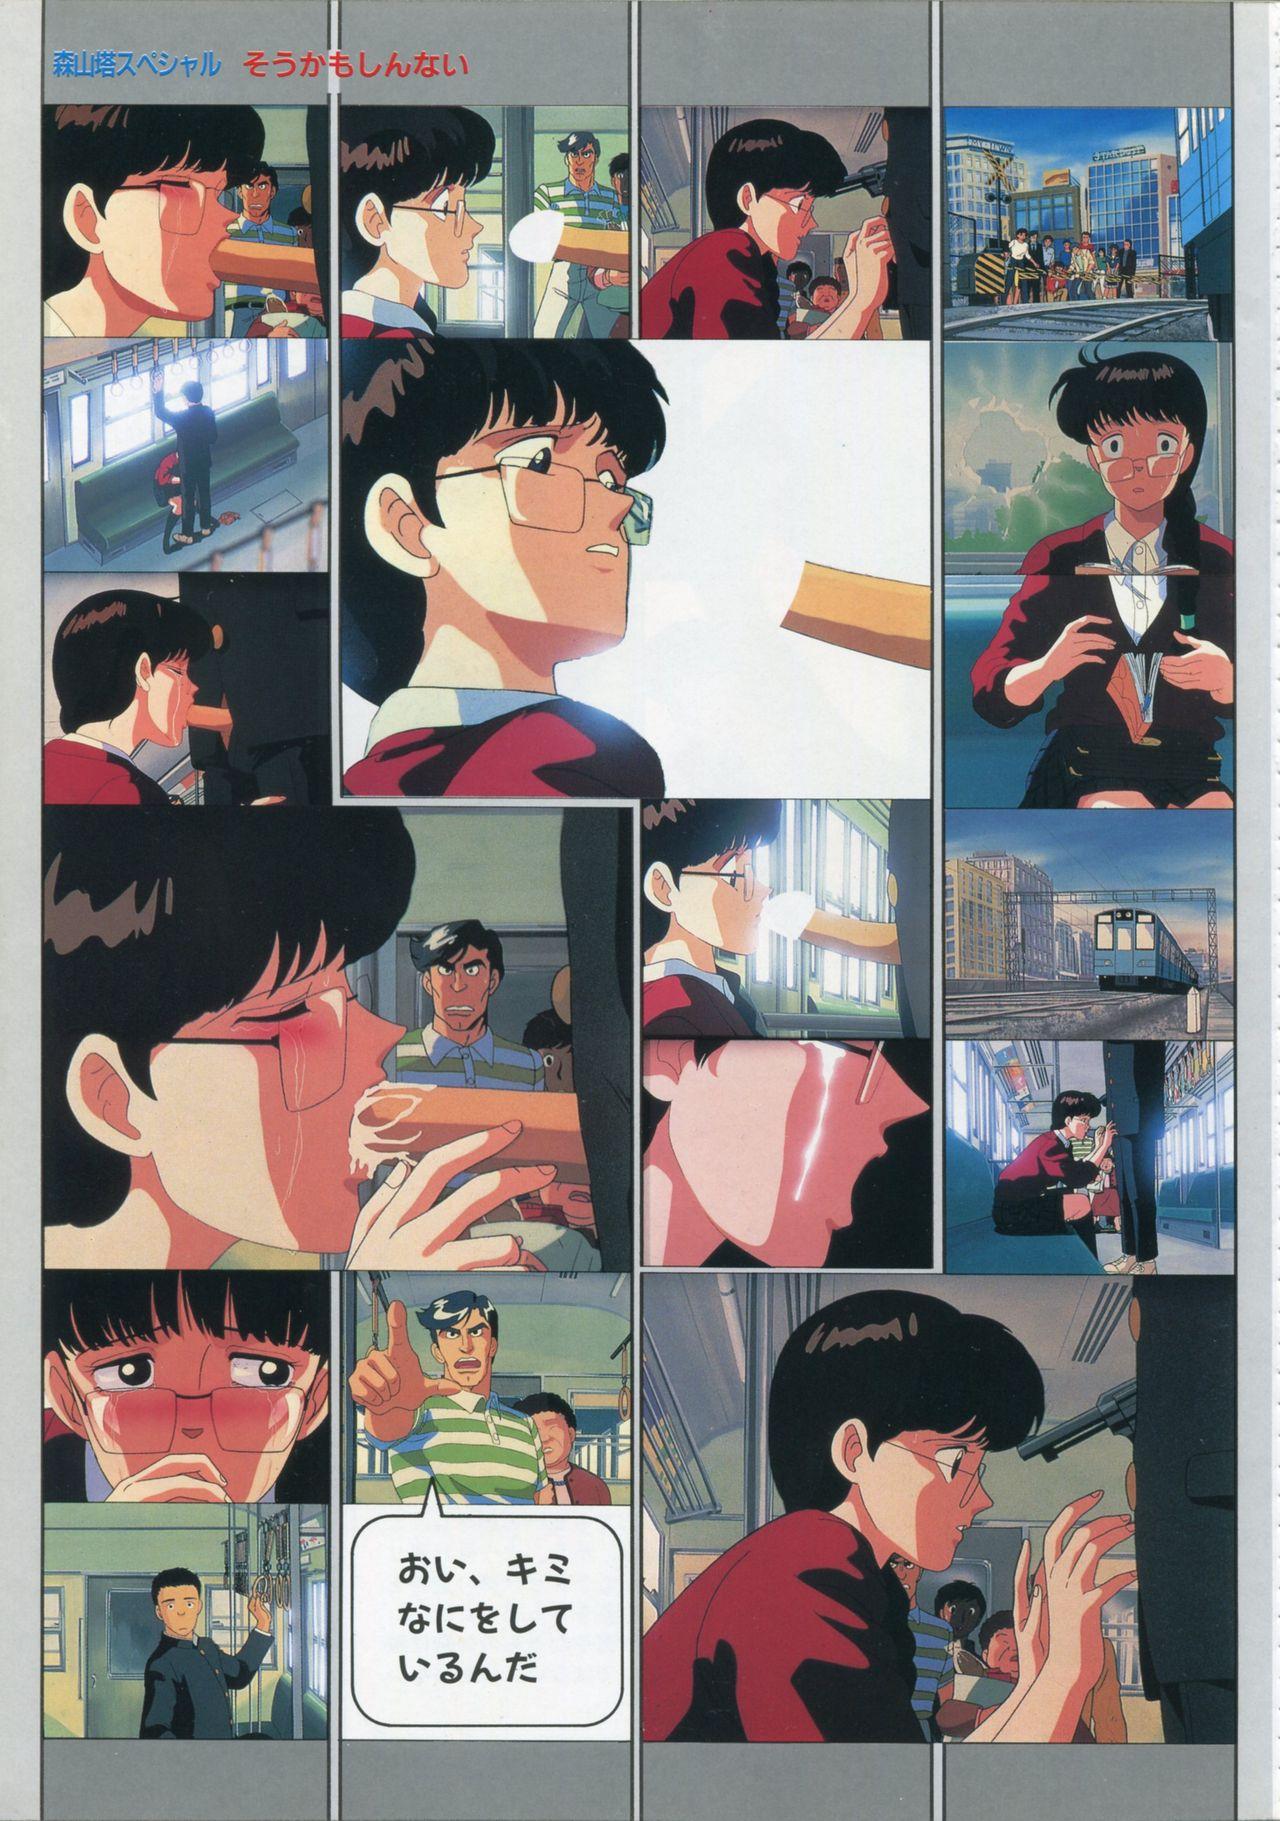 Bishoujo Anime Daizenshuu - Adult Animation Video Catalog 1991 22